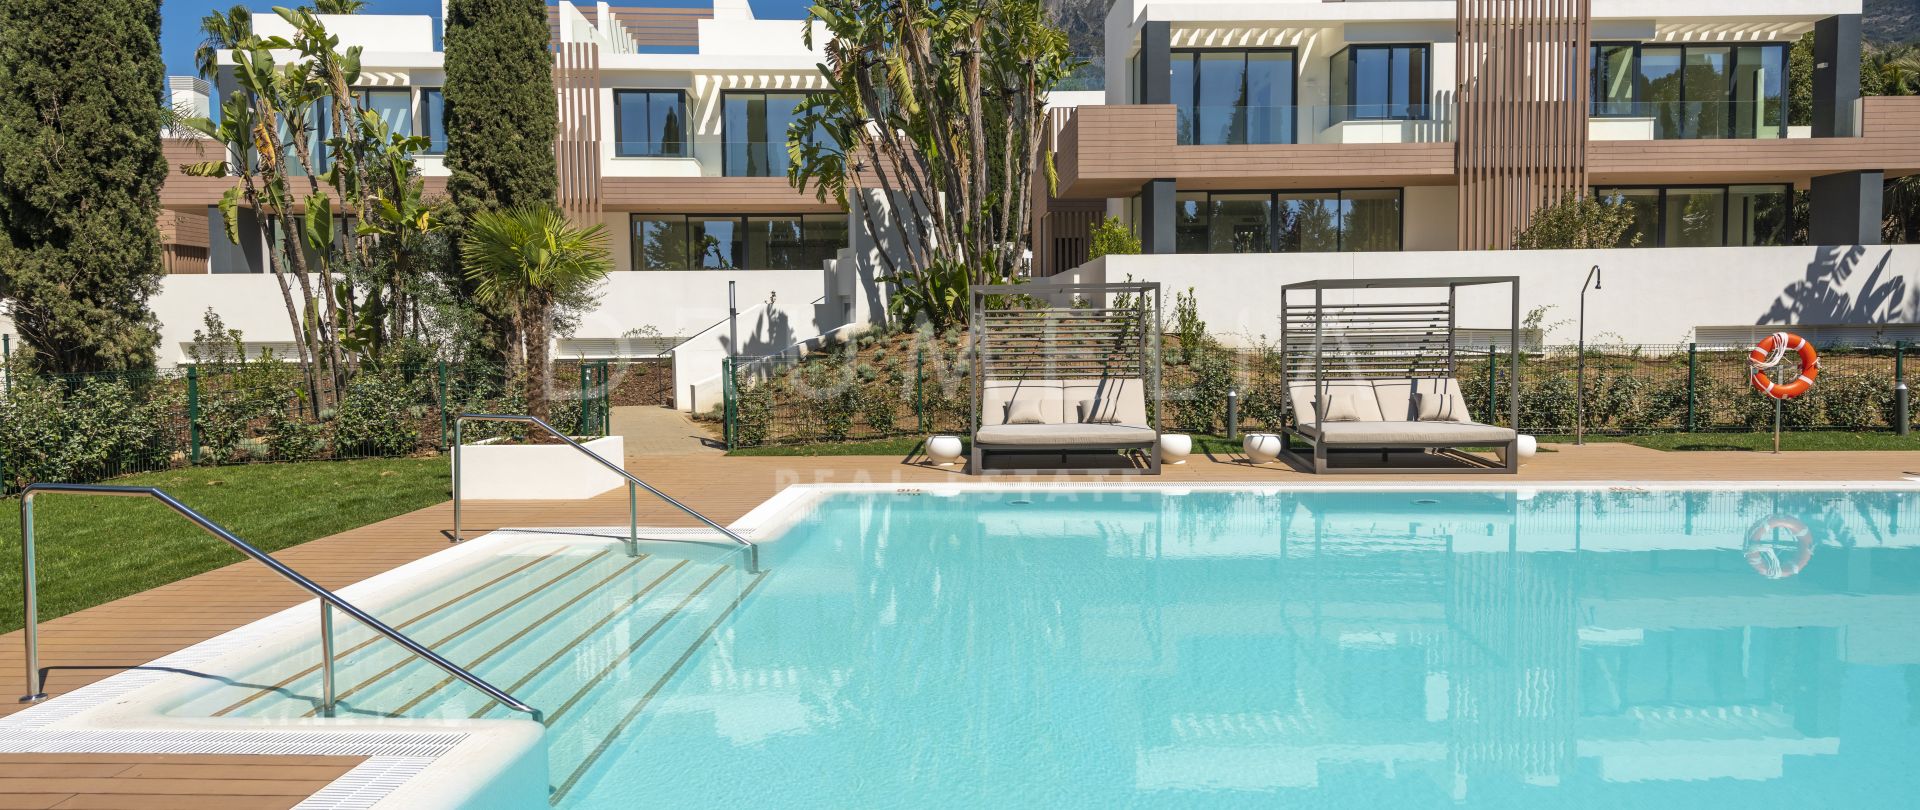 Brand New Semi Detached Contemporary Luxury House in Sierra Blanca, Marbella Golden Mile